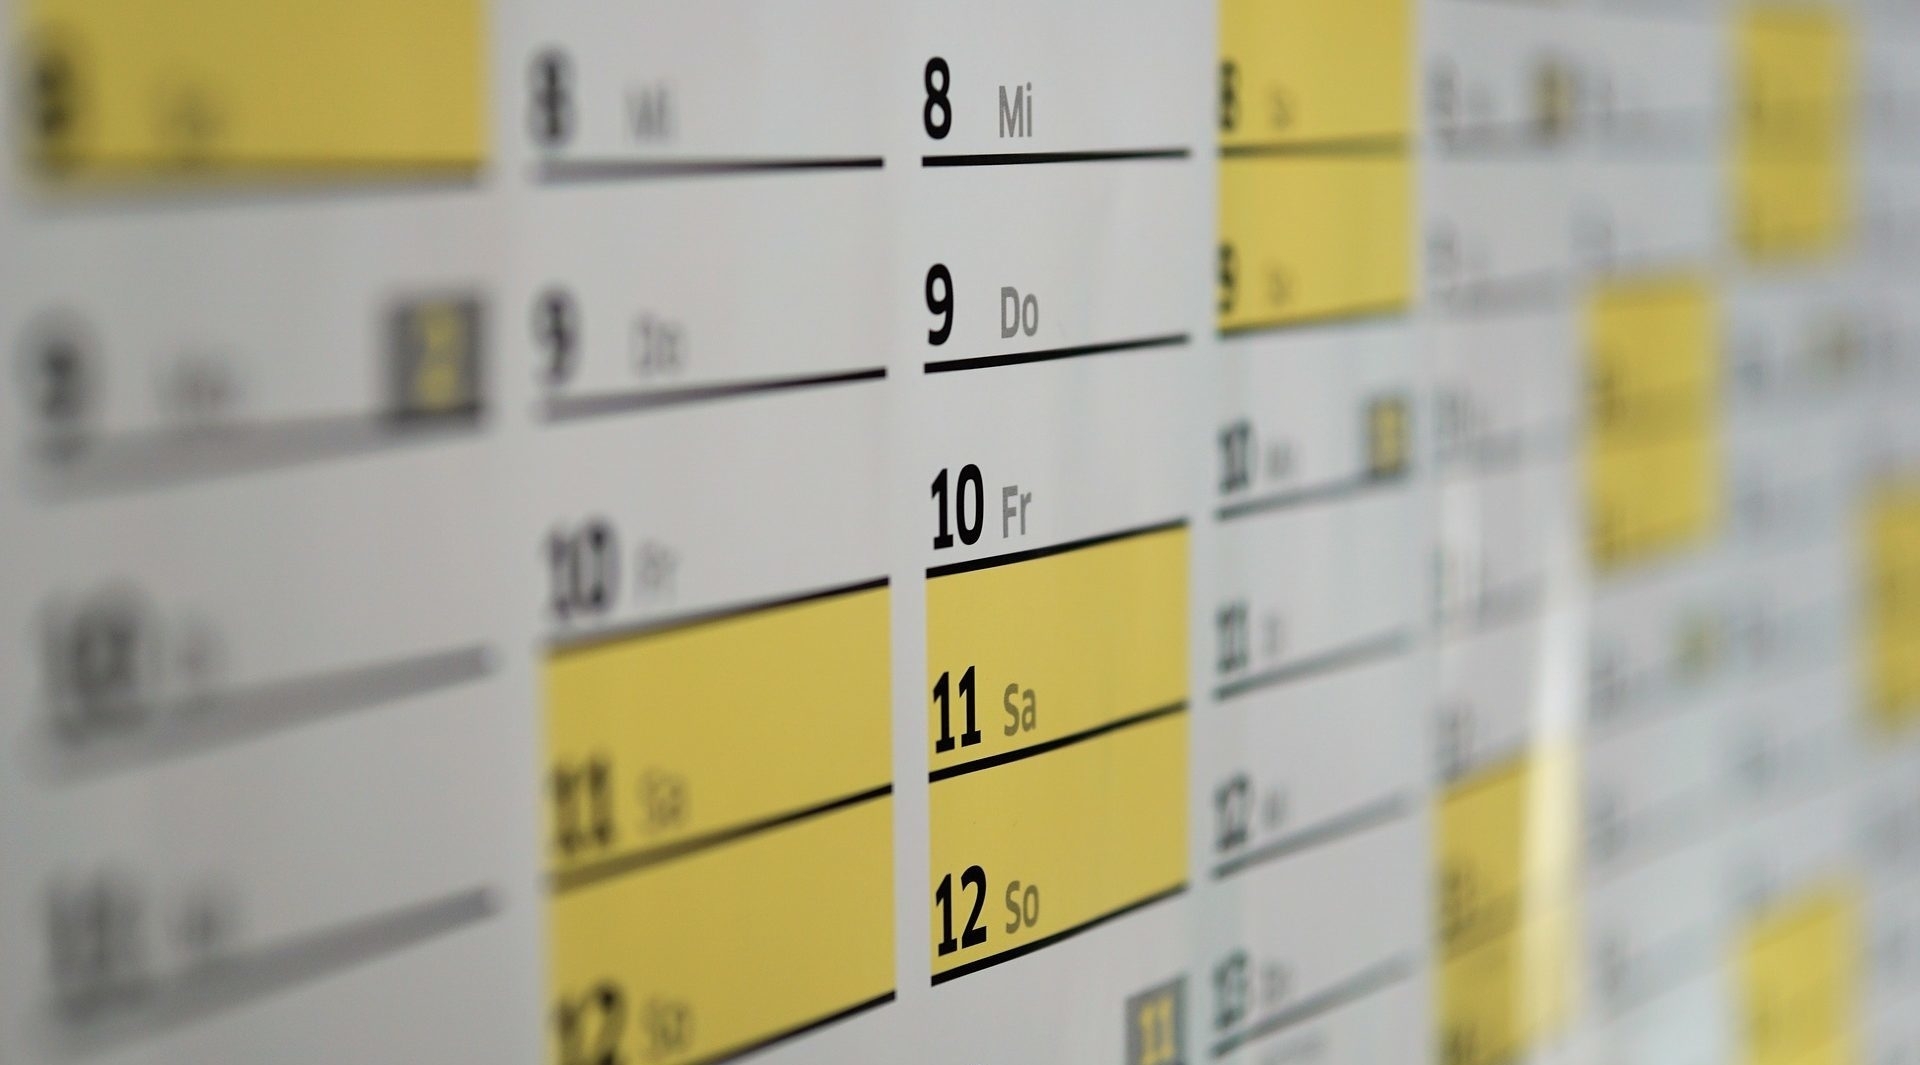 Kwizcom Sharepoint Calendar Plus Web Part